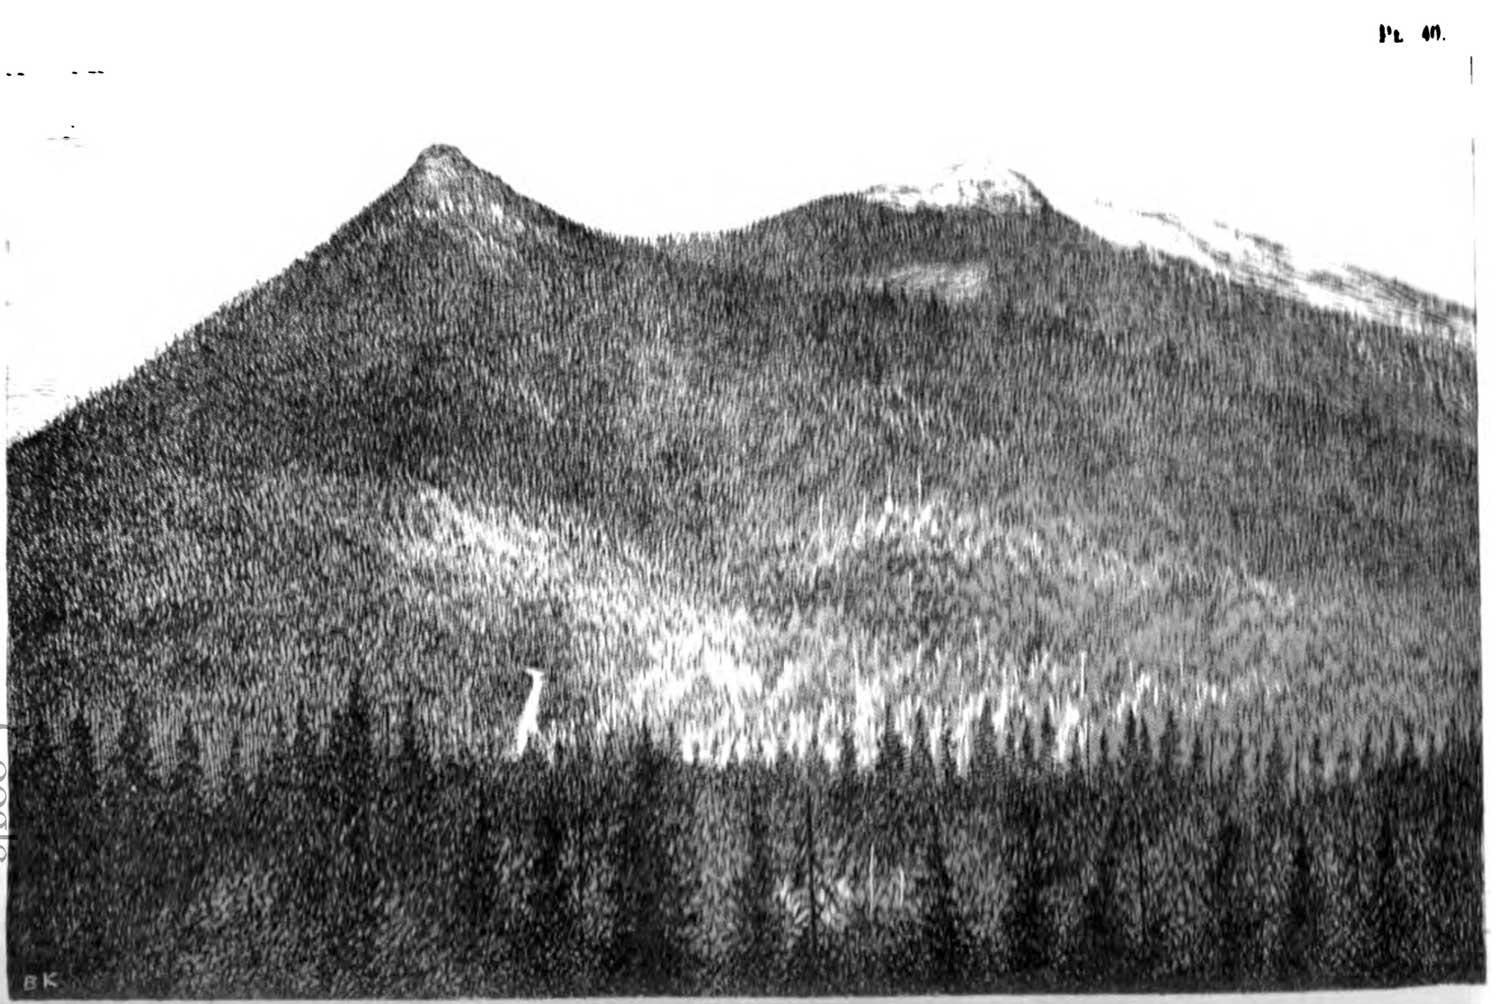 Mount Cheadle. George Monro Grant, plate 40